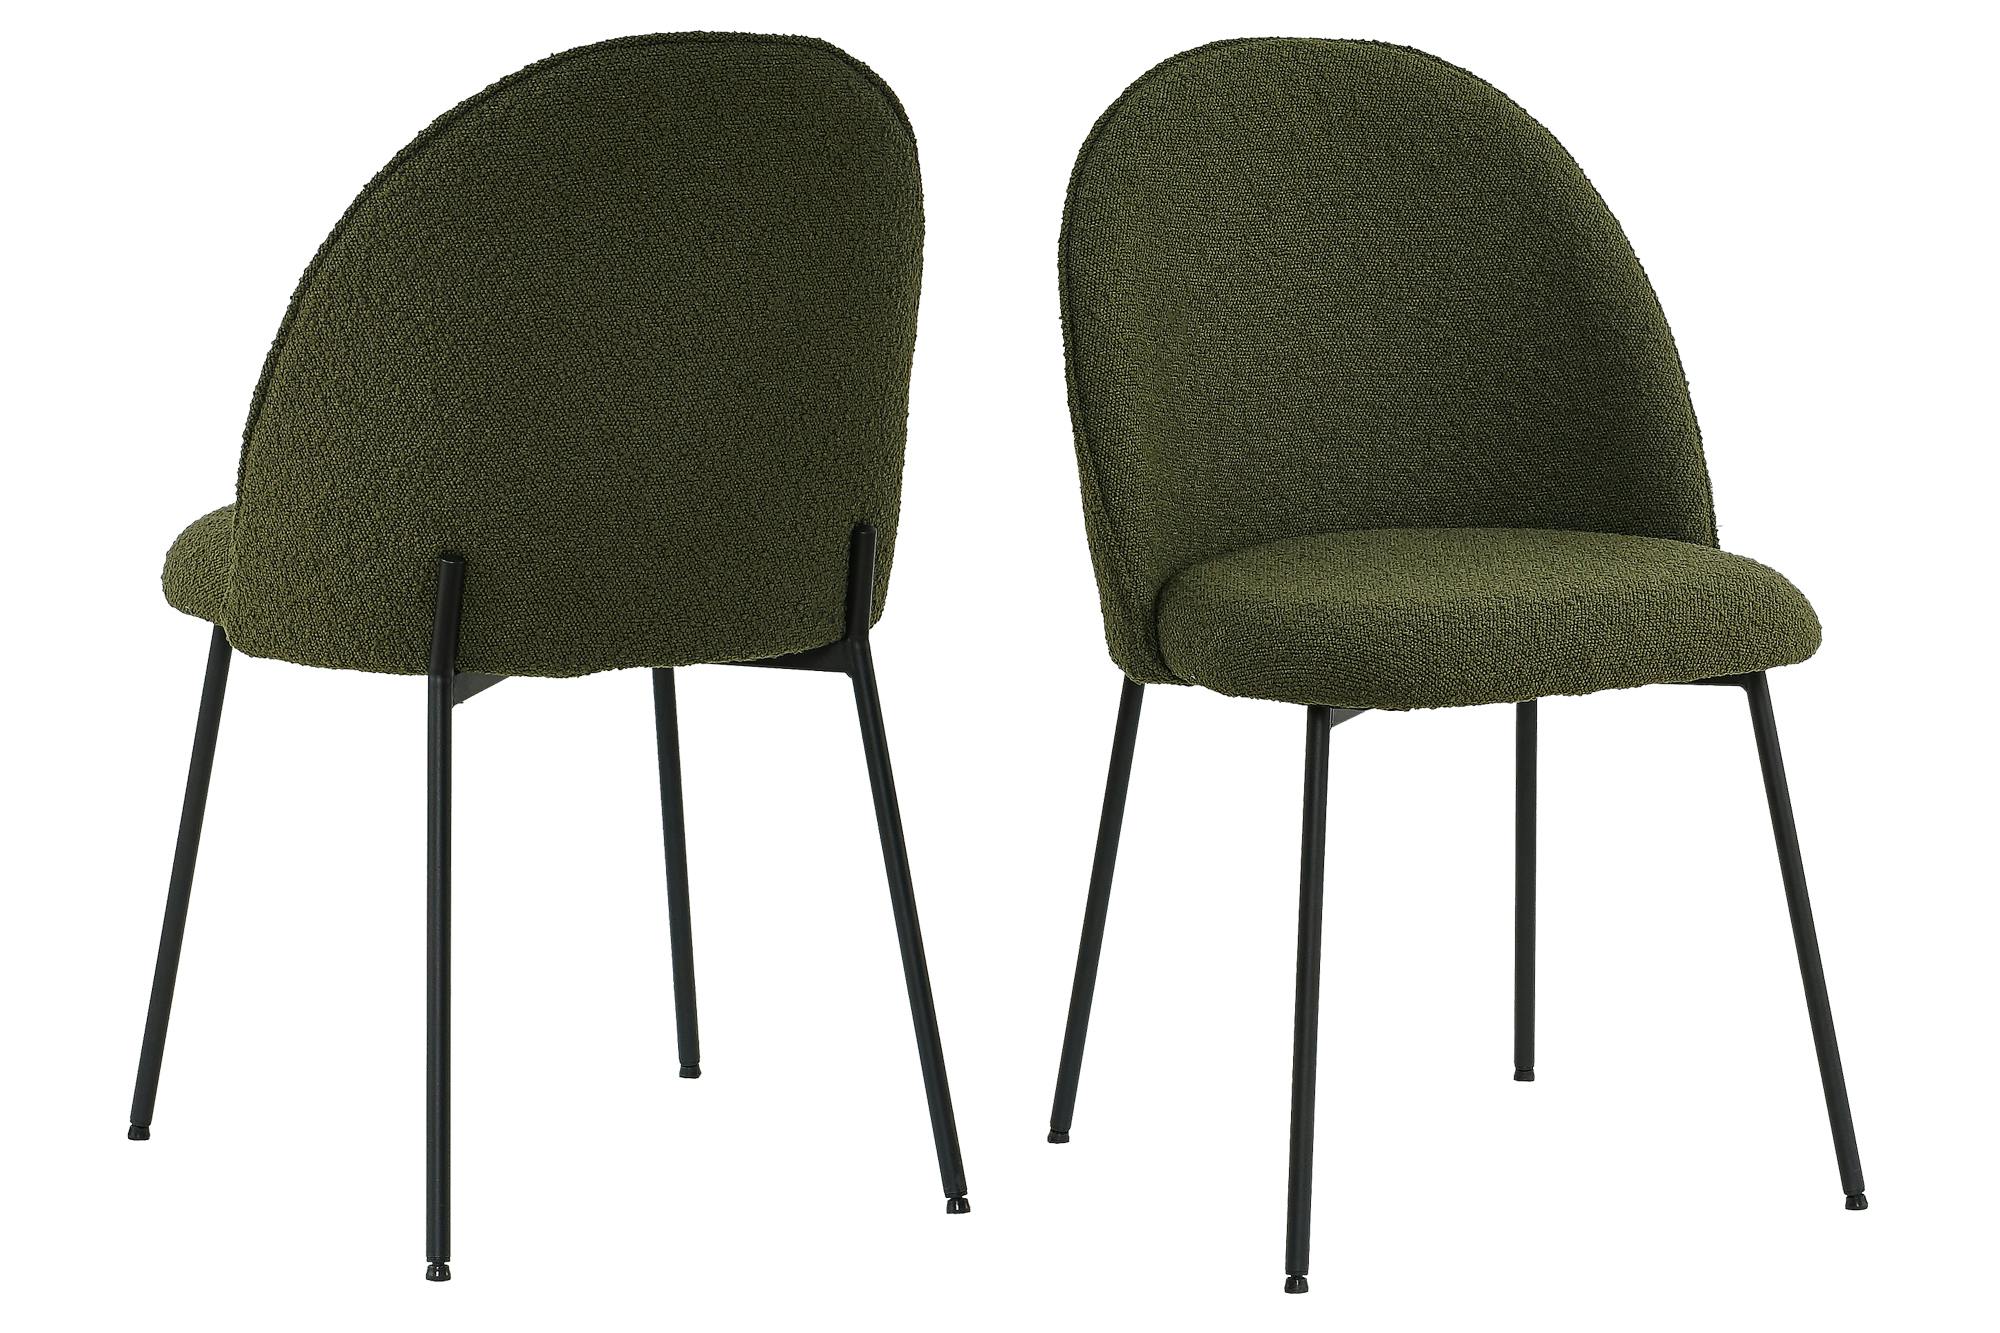 grün| Marktplatz |Serie Chair METRO schwarz | Stuhl B57xT54xH52cm | Beine SIT&CHAIRS Metall Tom Möbel gepolstert 2er-Set | Tailor SIT |02412-03 T-Bouclé | Pad